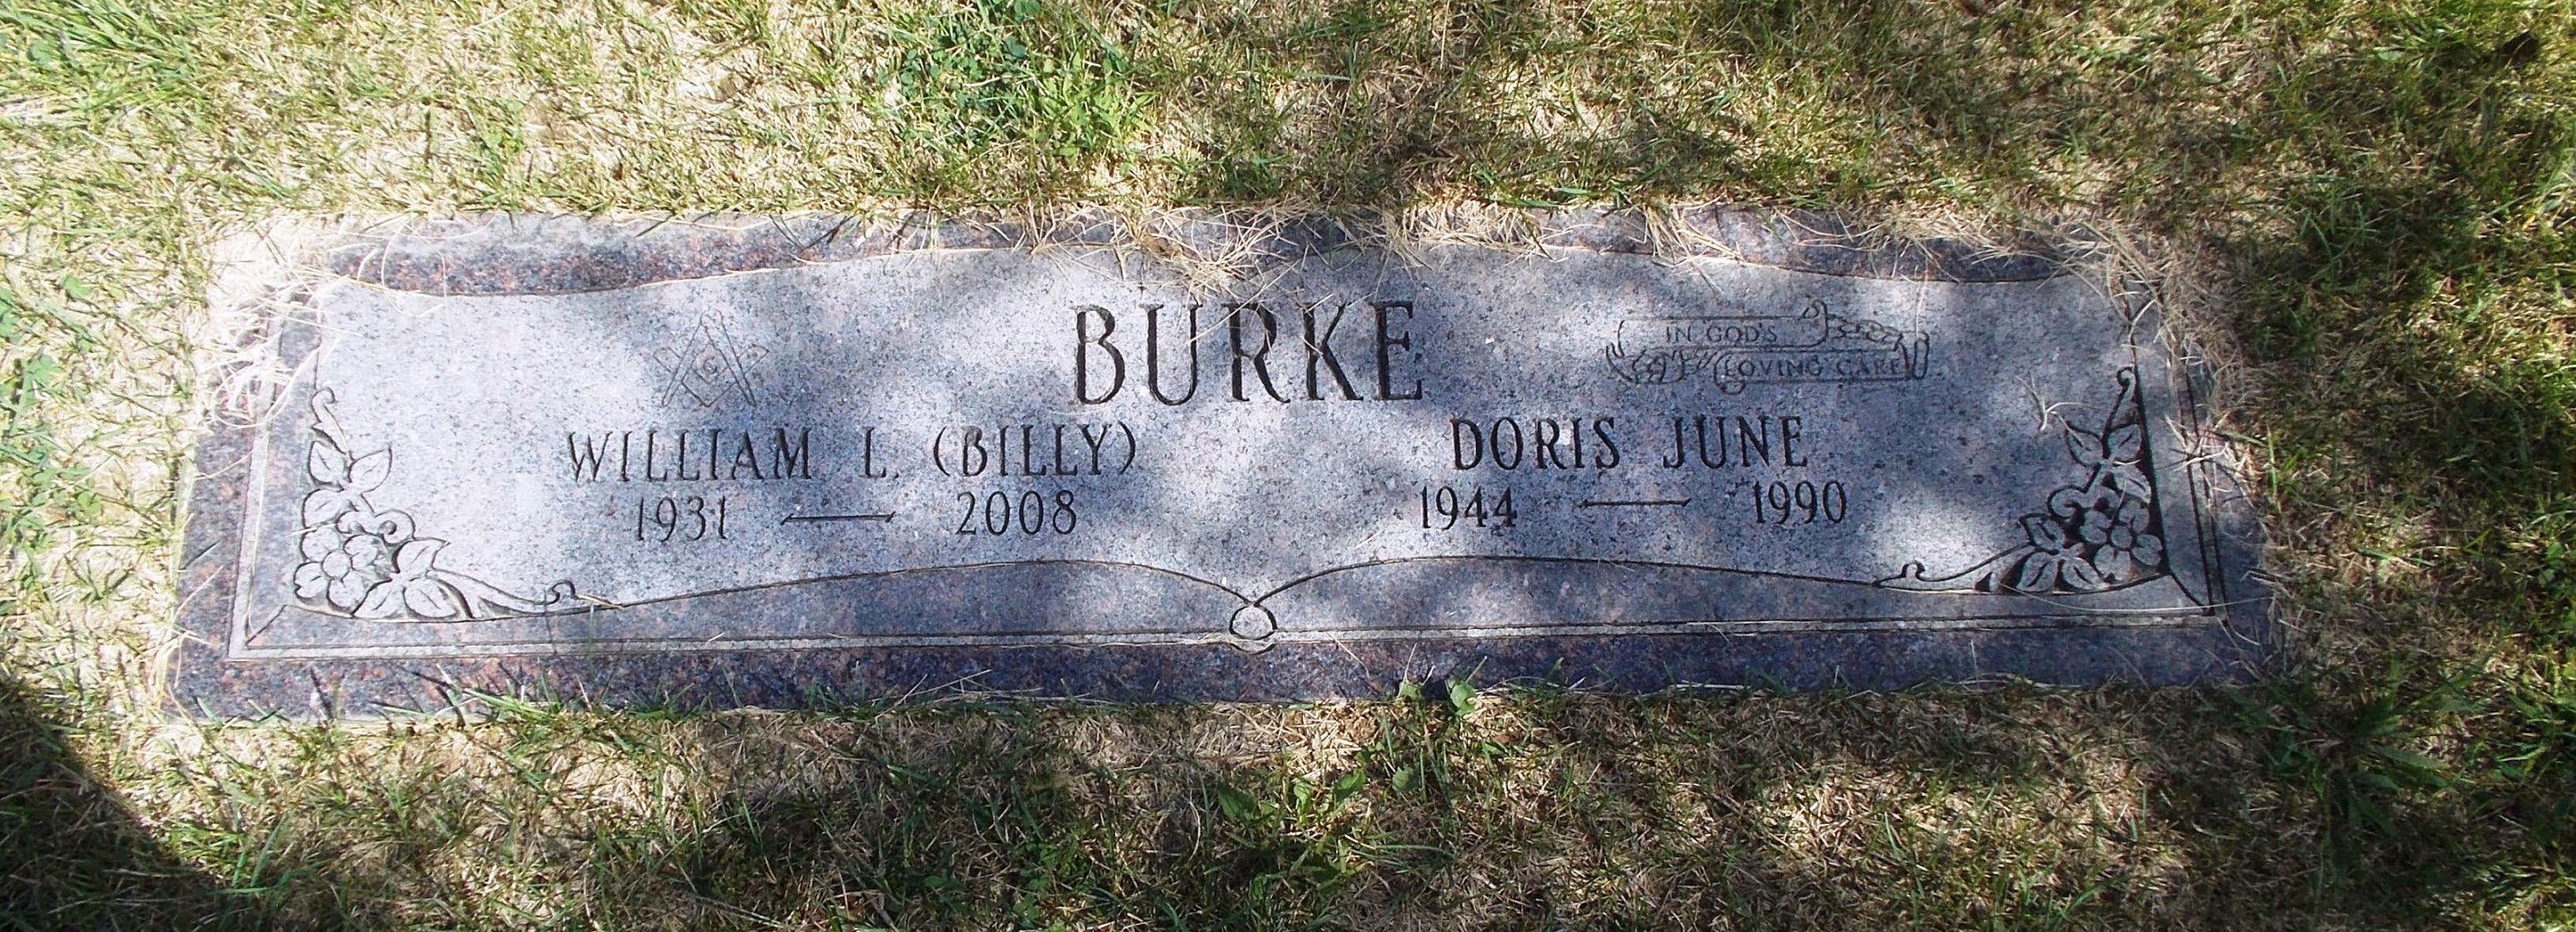 William L "Billy" Burke